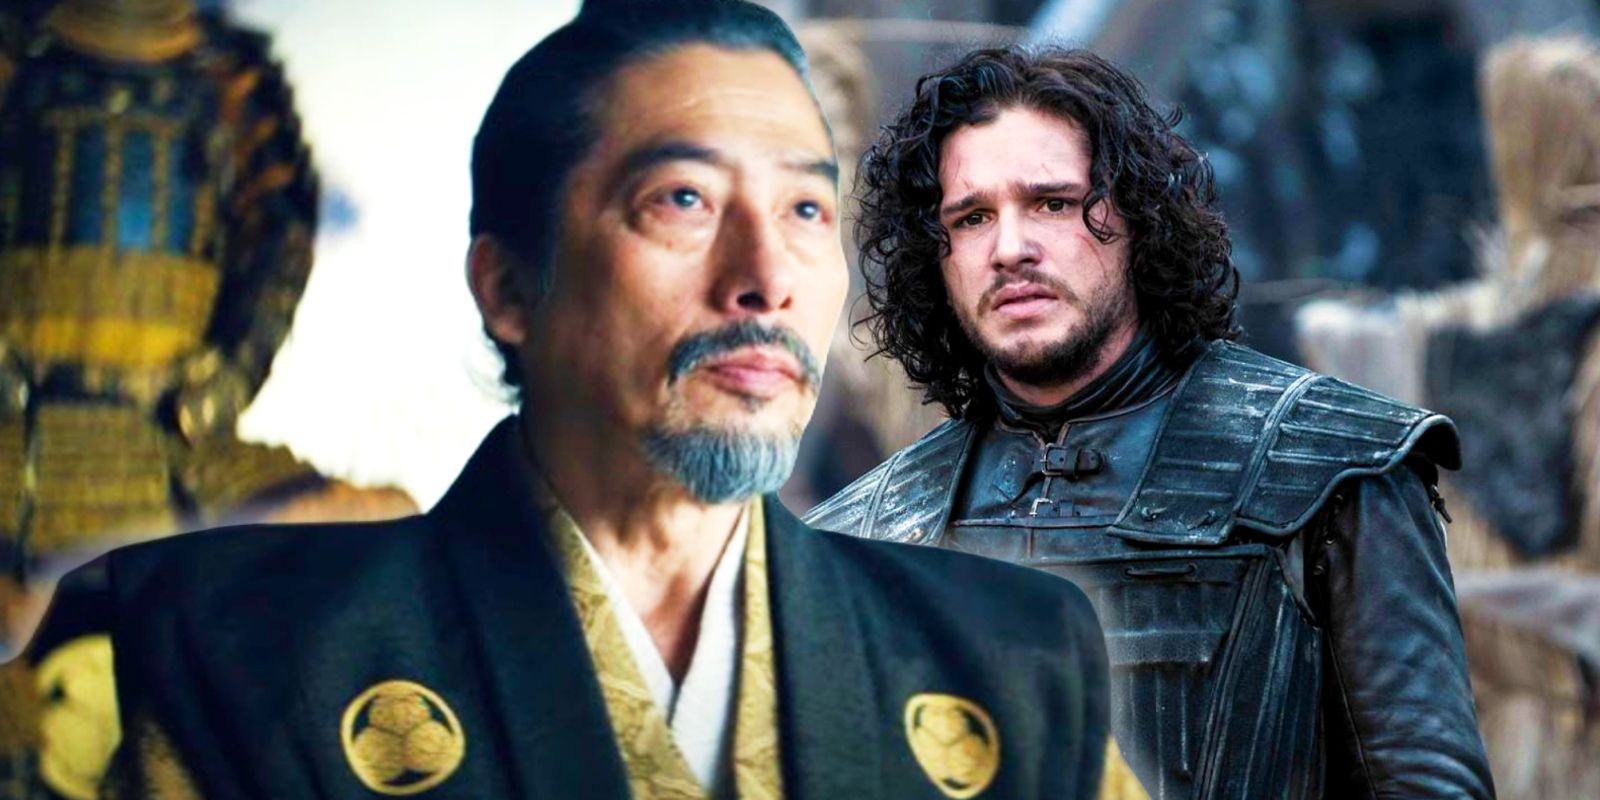 Hiroyuki Sanada in Shogun juxtaposed with Kit Harington as Jon Snow in Game of Thrones